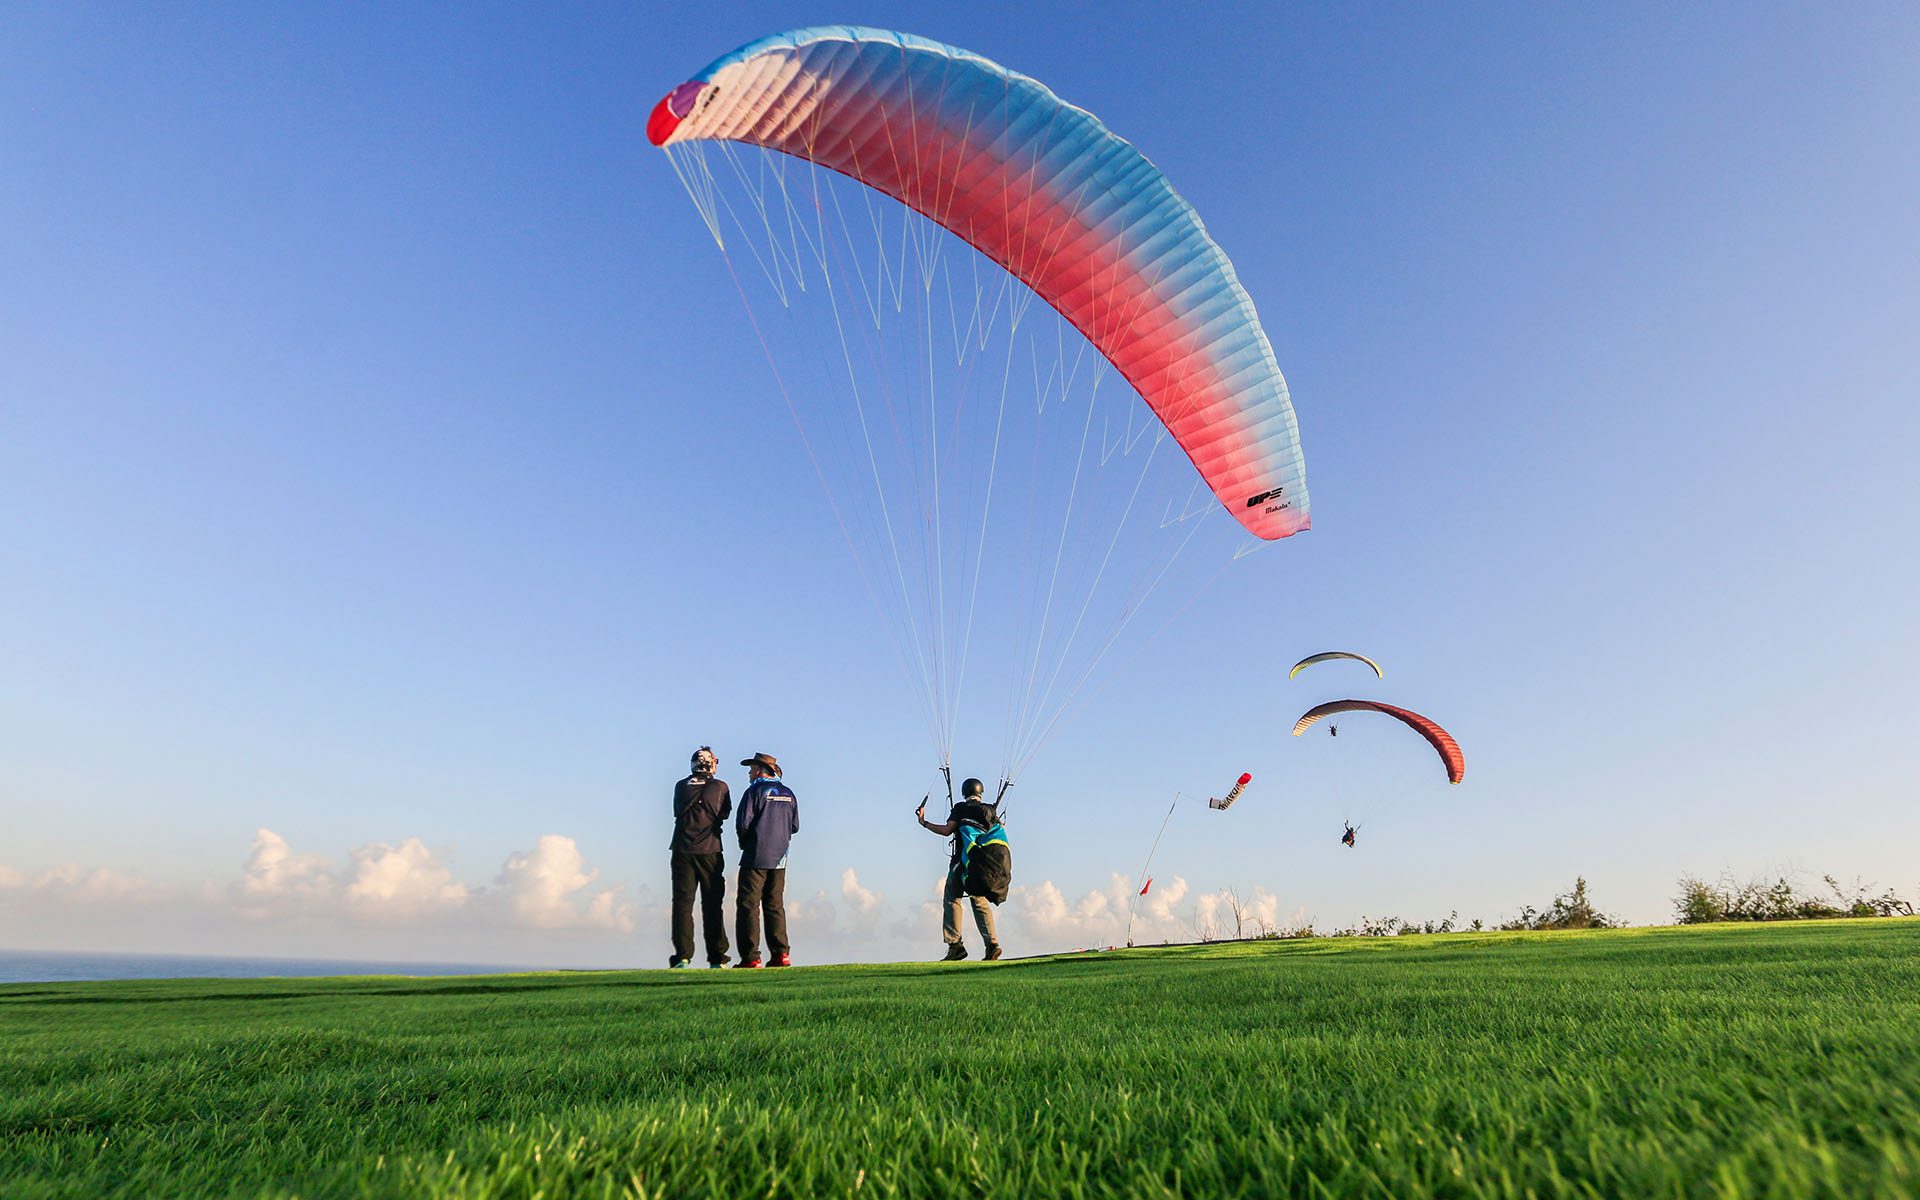 Riug Paragliding landing and take off area